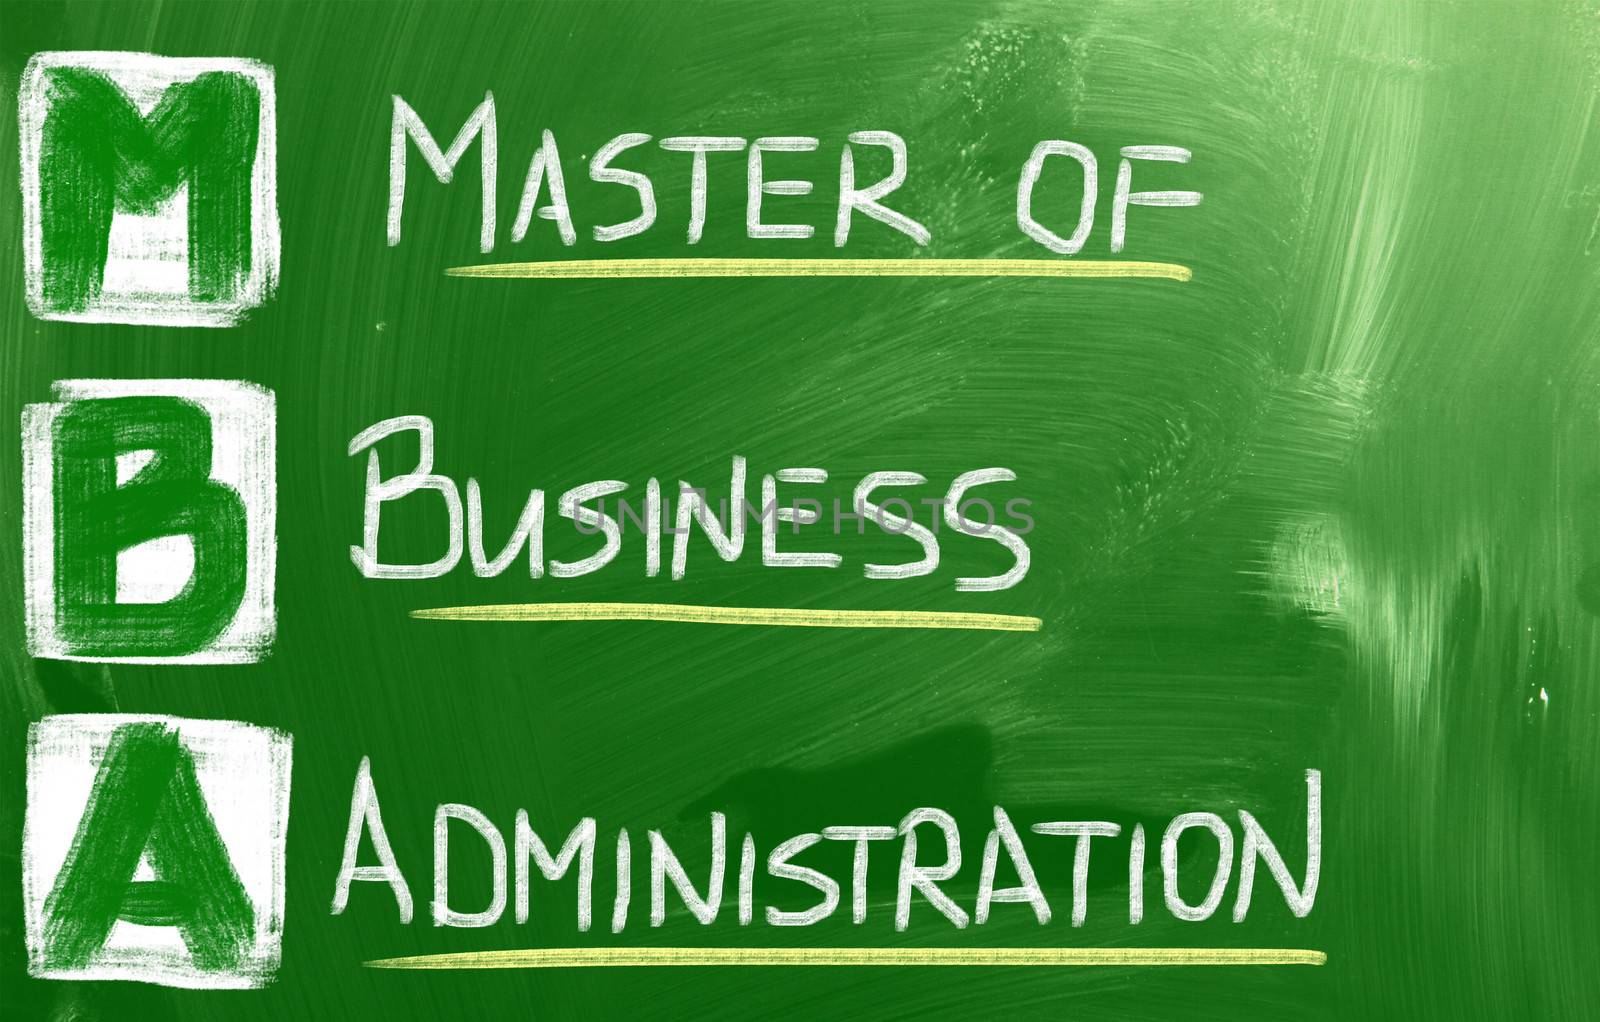 Master Of Business Administration Concept by KrasimiraNevenova